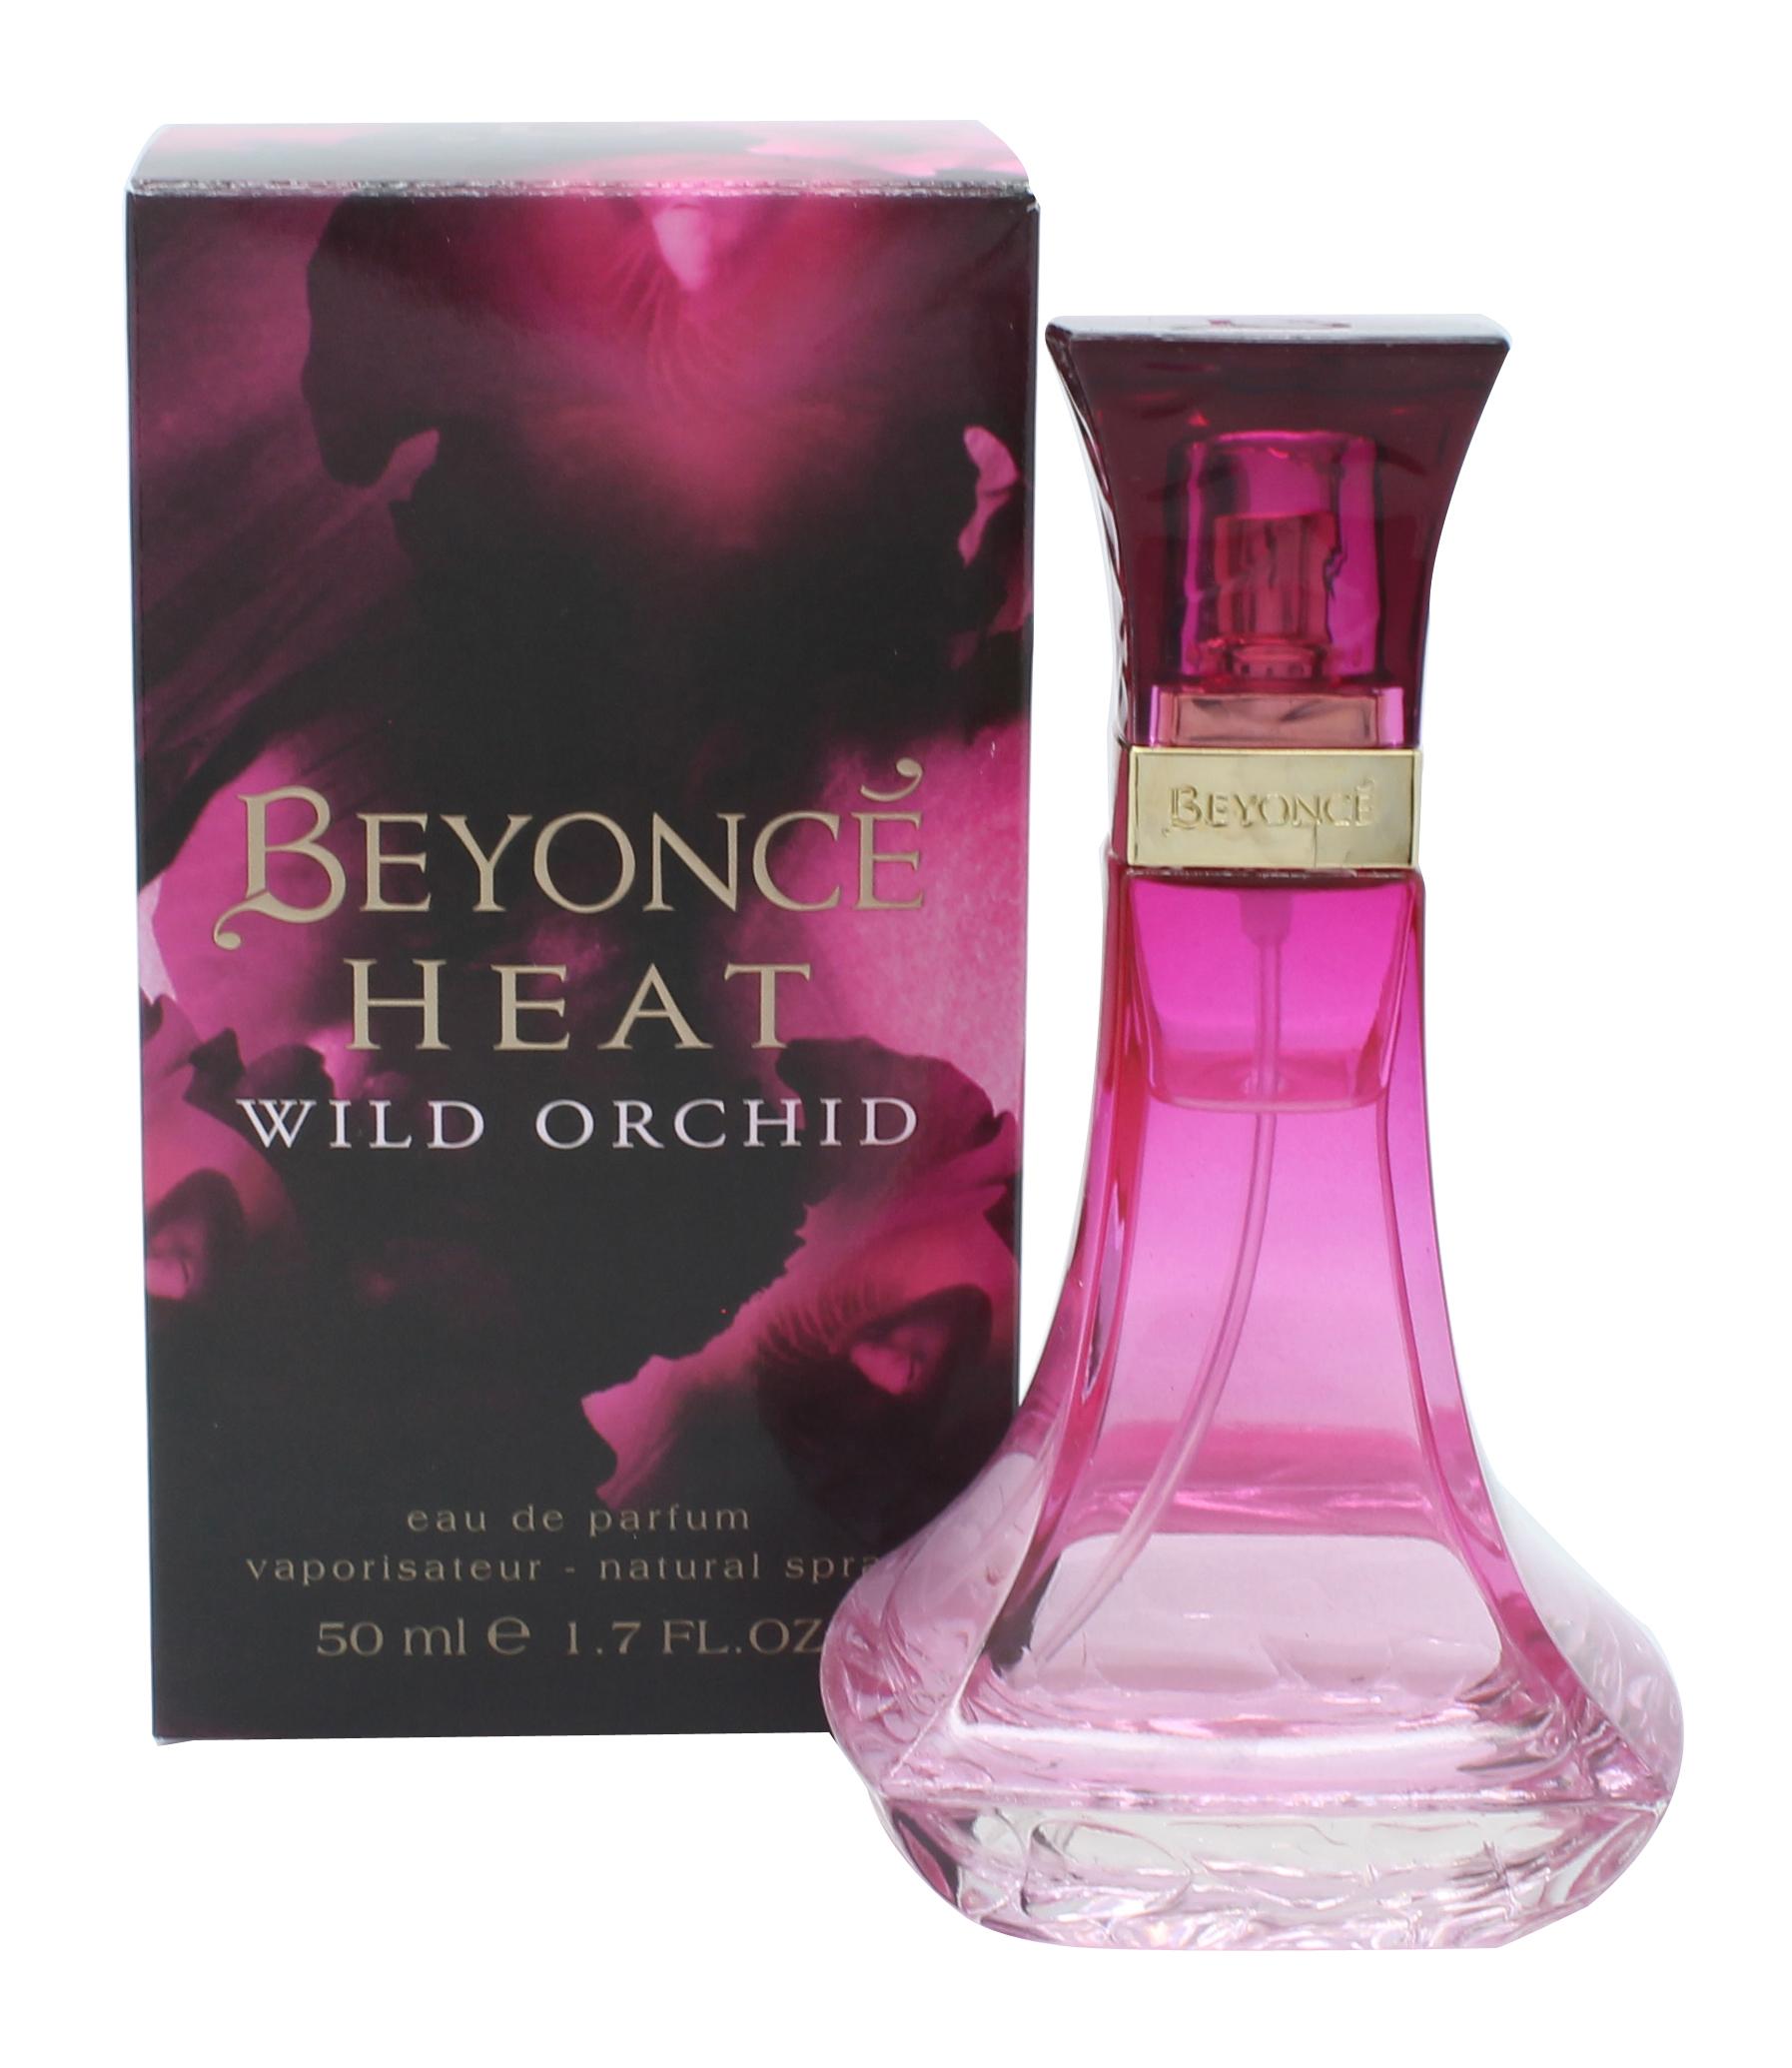 Beyonce Heat Wild Orchid Eau de Parfum 50ml Spray